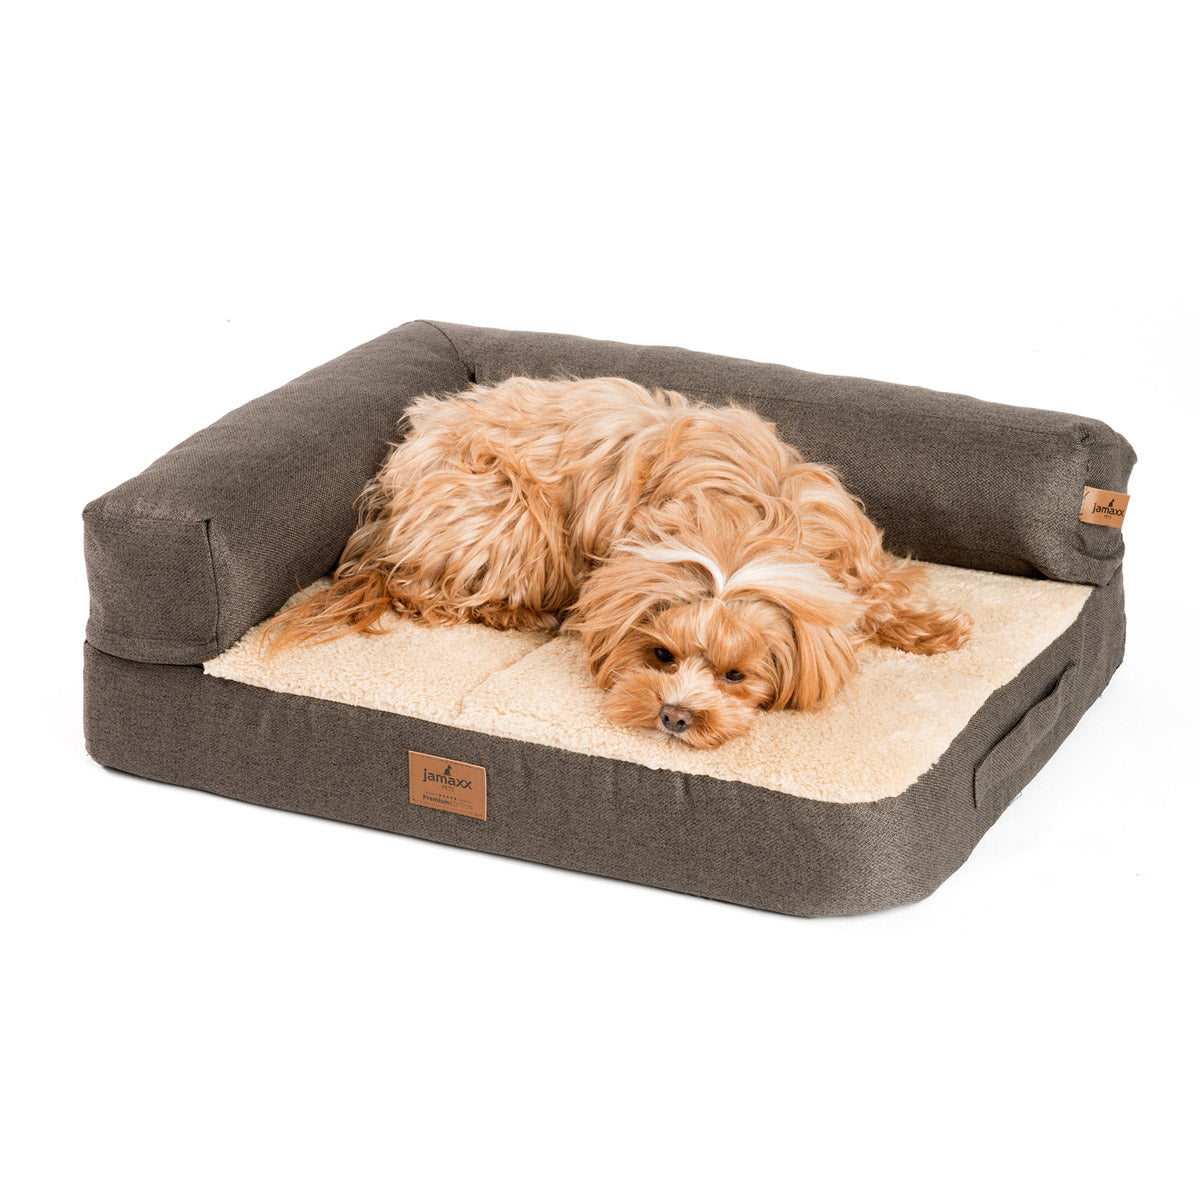 Premium Hundesofa mit abnehmbaren Seitenpolster